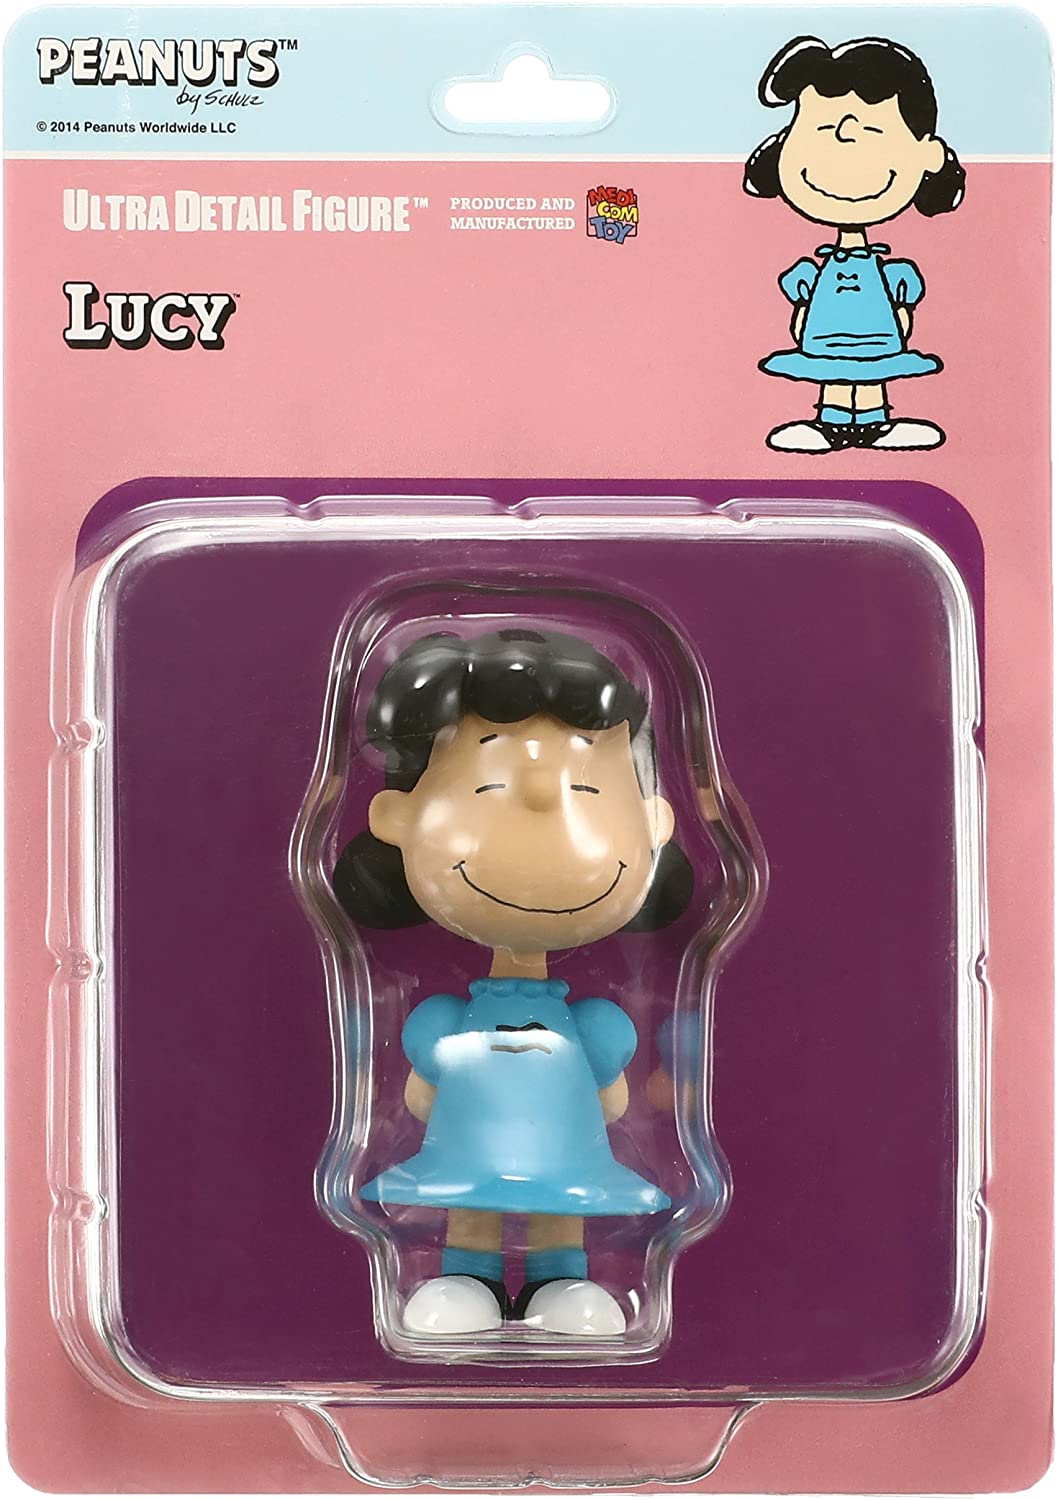 Medicom UDF Ultra Detalhe Figura Peanuts Series 3 Lucy Oficial Licenciado